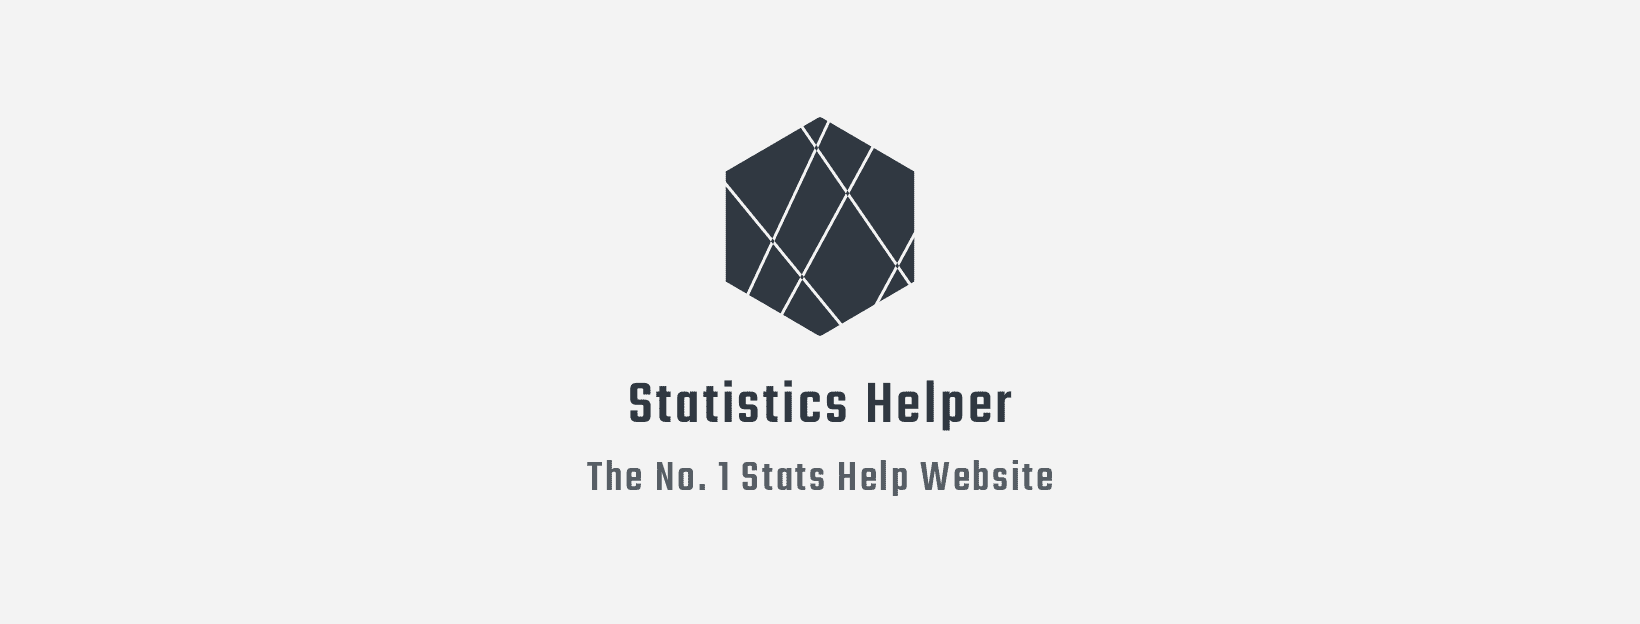 Statistics Helper Banner